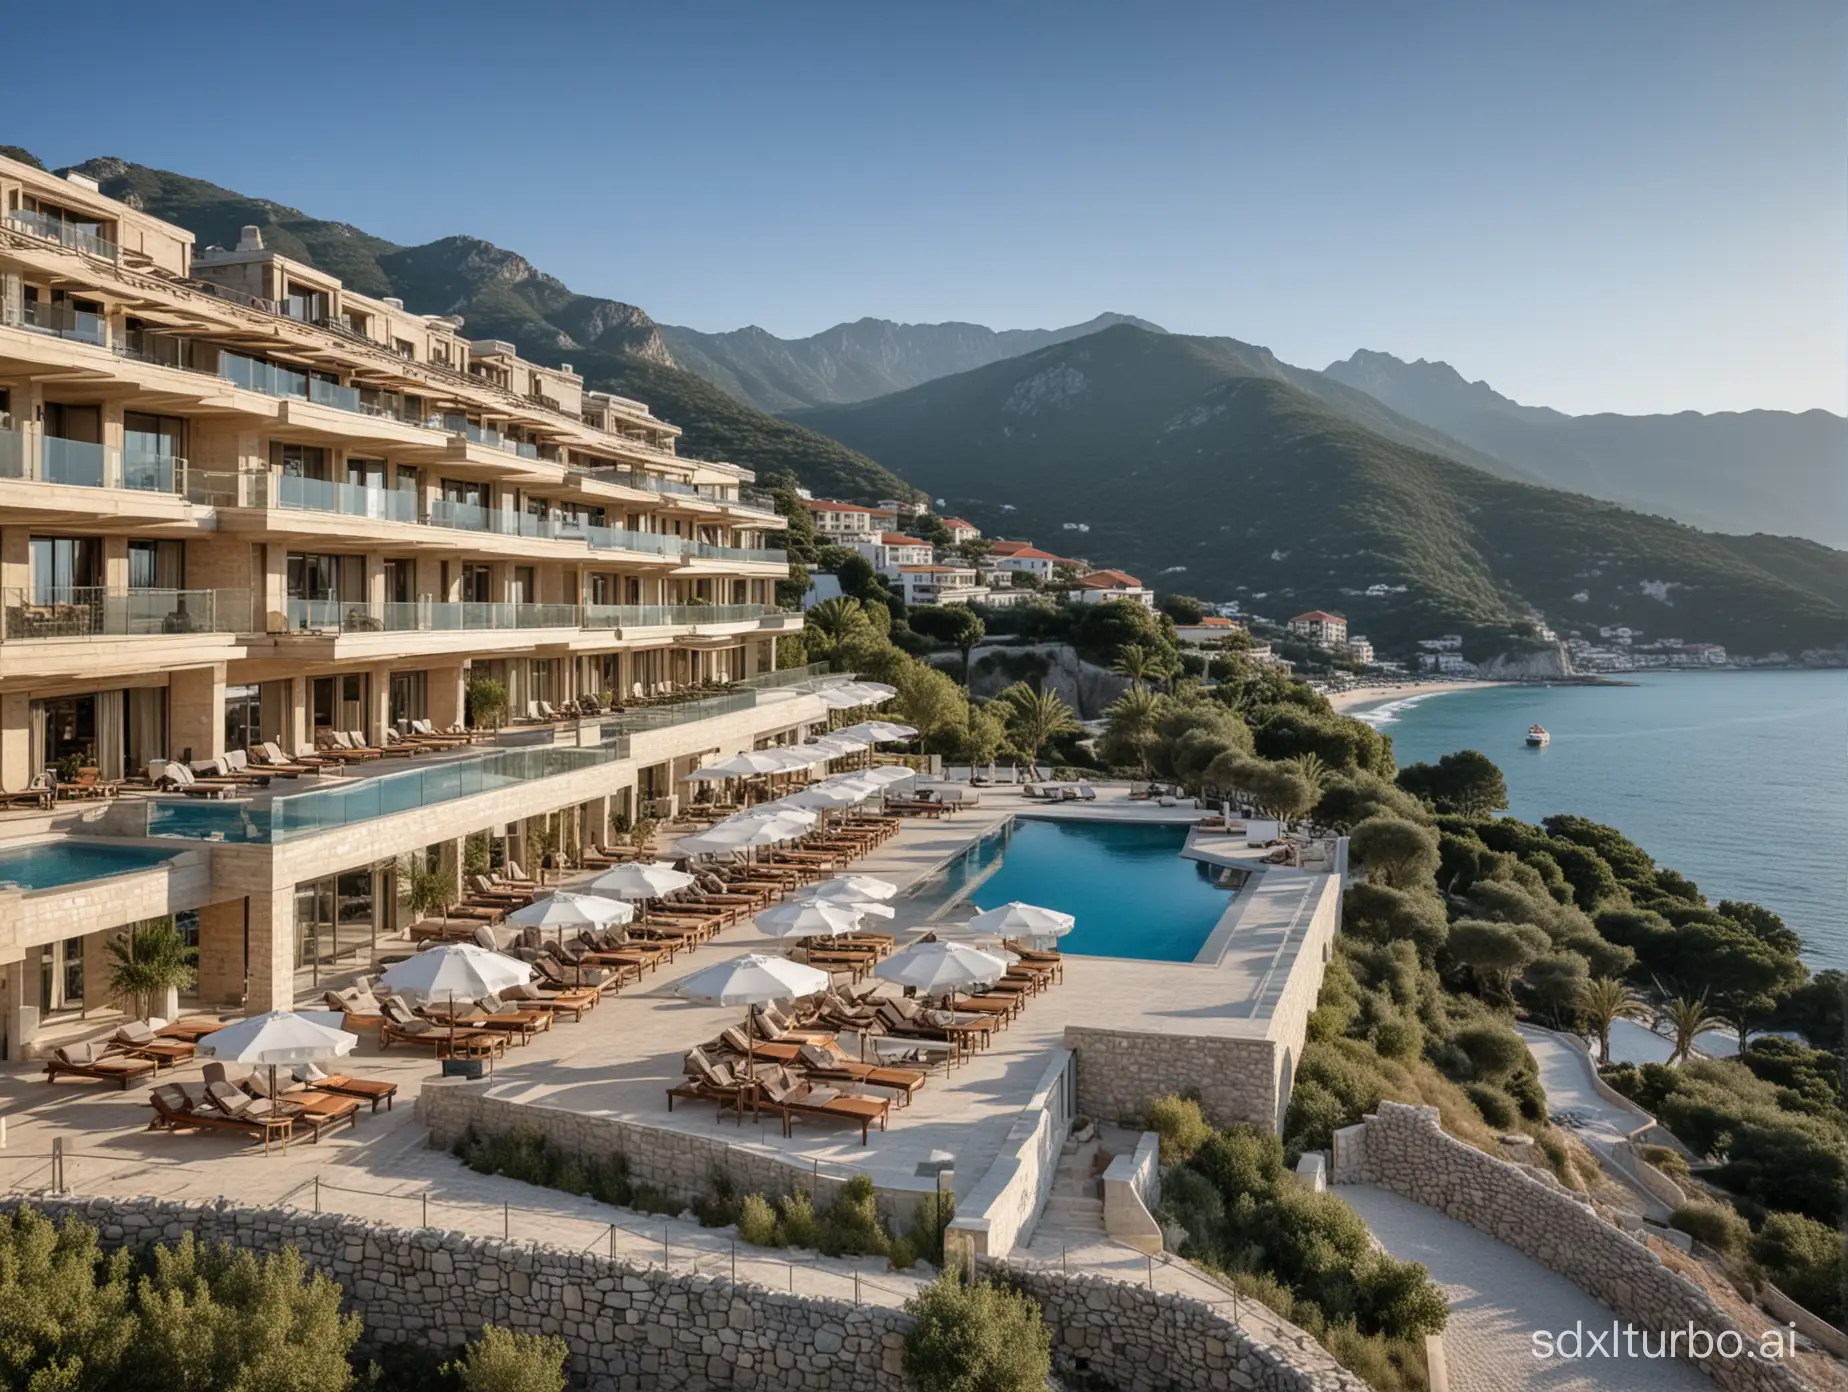 luxury hotel, near the sea, moutain